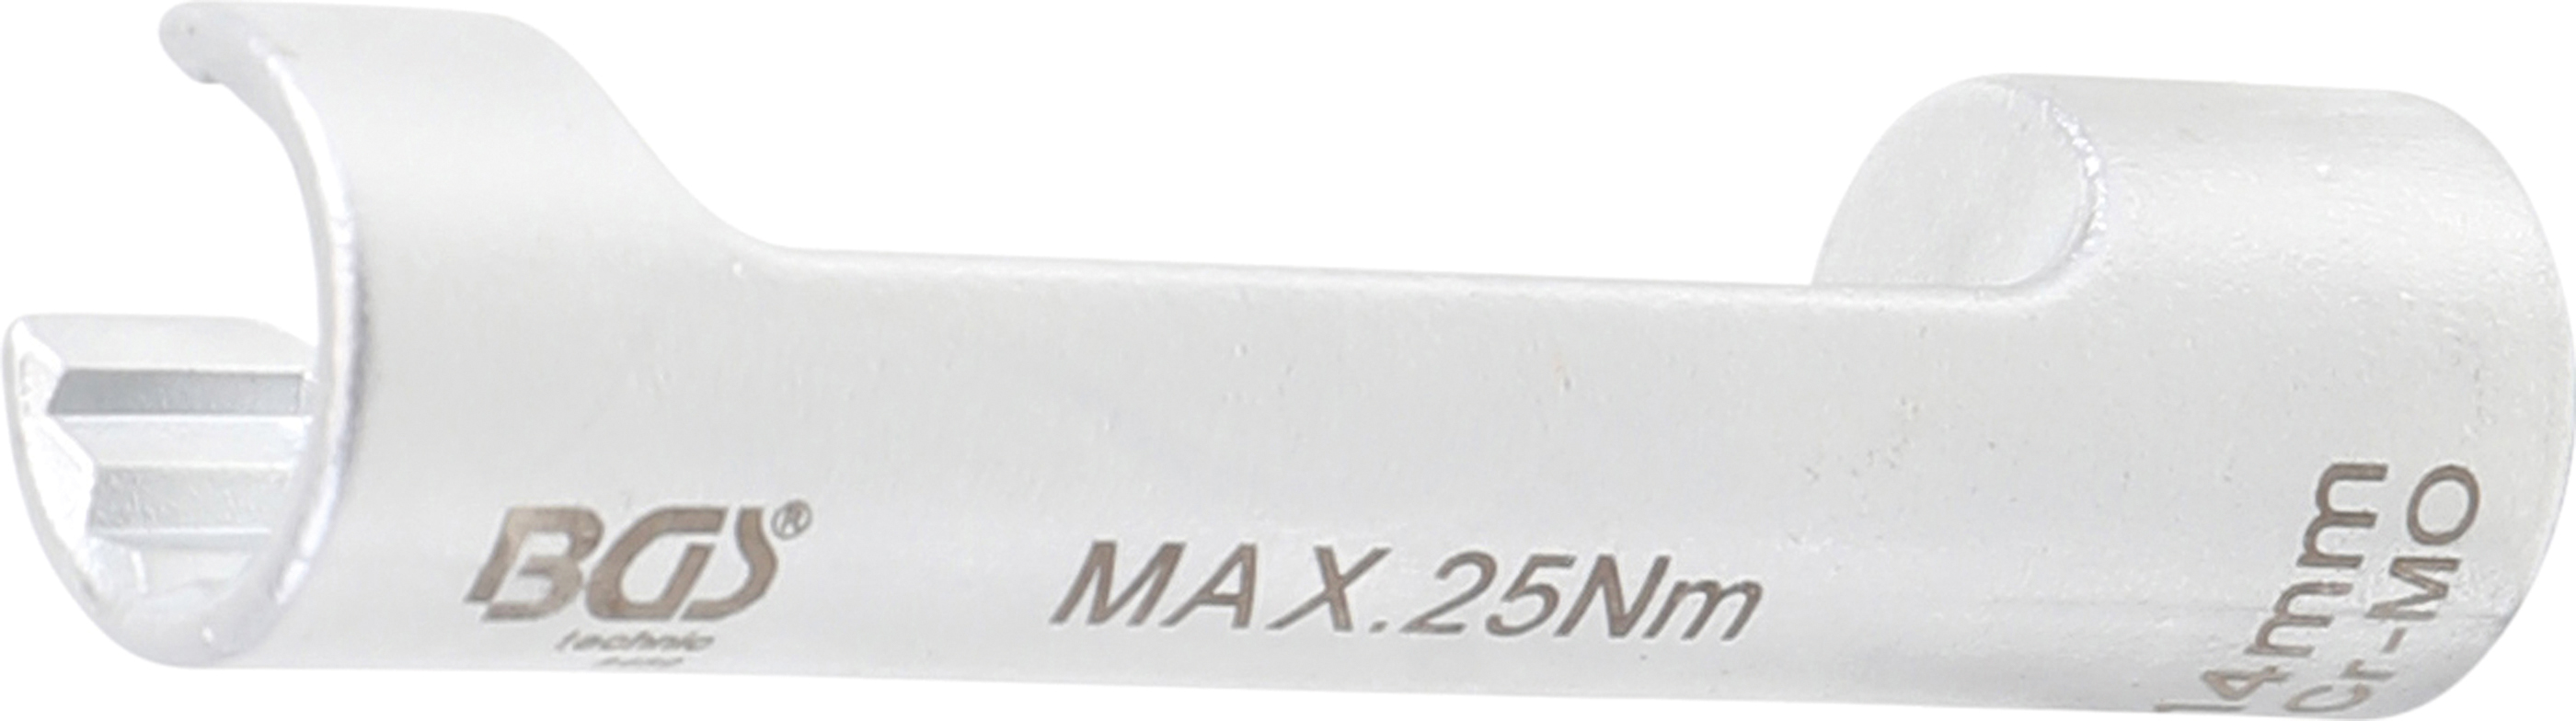 BGS 8469  Cheie tubulara 14 mm decupata speciala pentru conducte de injectoare Mercedes-Benz antrenare 10 mm (3/8"), lungime 85.5mm